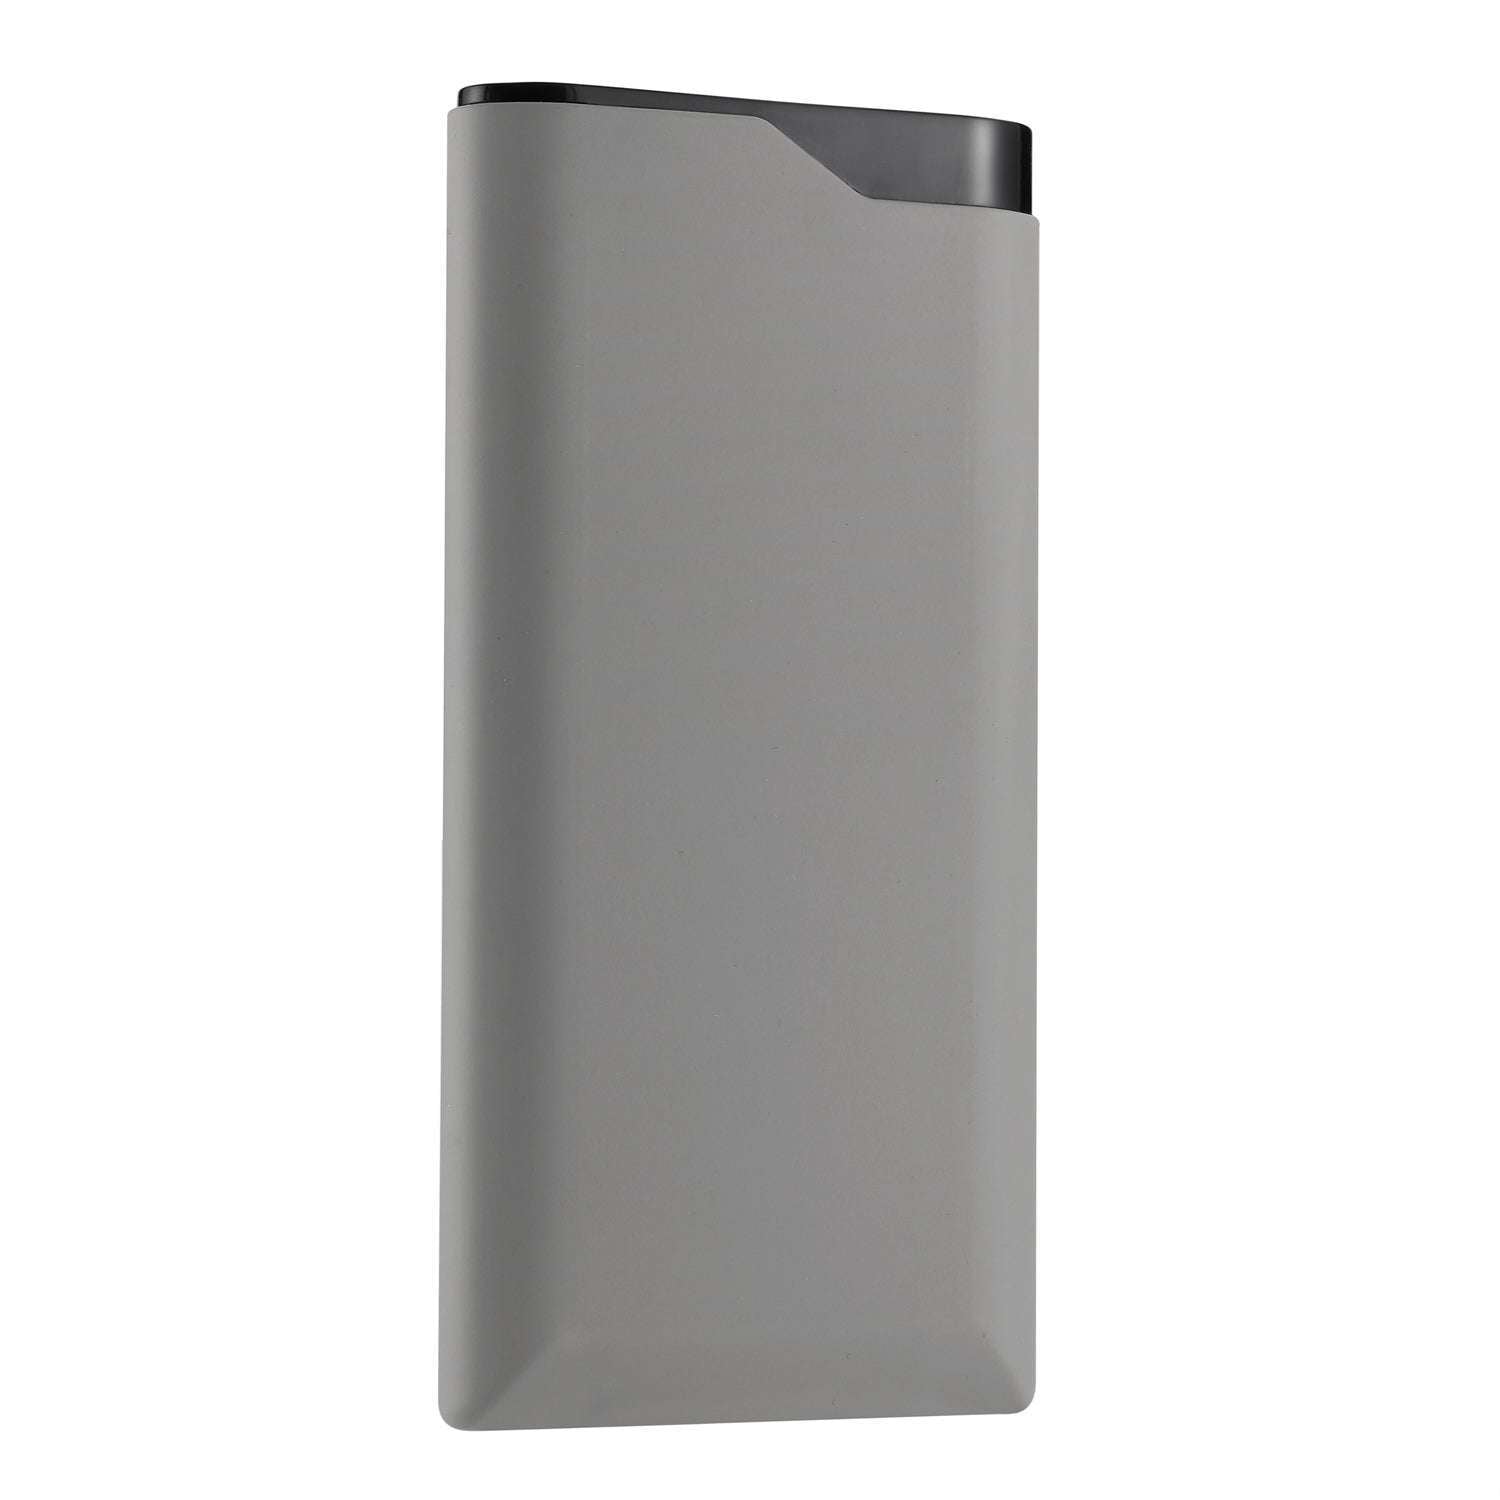 Ultra Slim 20,000mAh Max Portable Power Bank